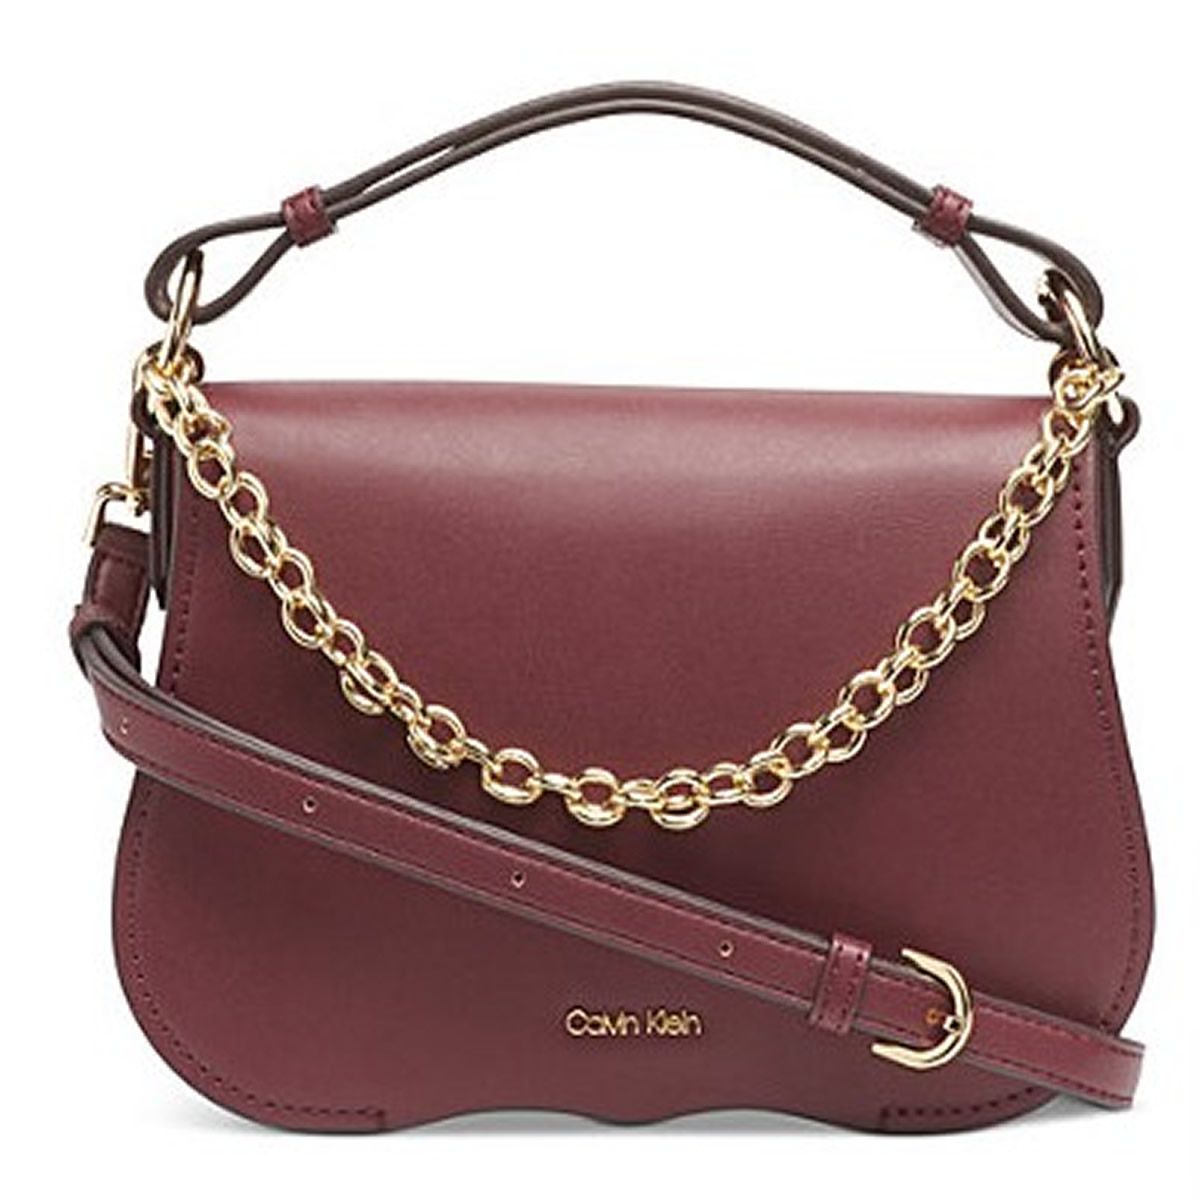 Blue Calvin Klein Handbags & Bags - Macy's